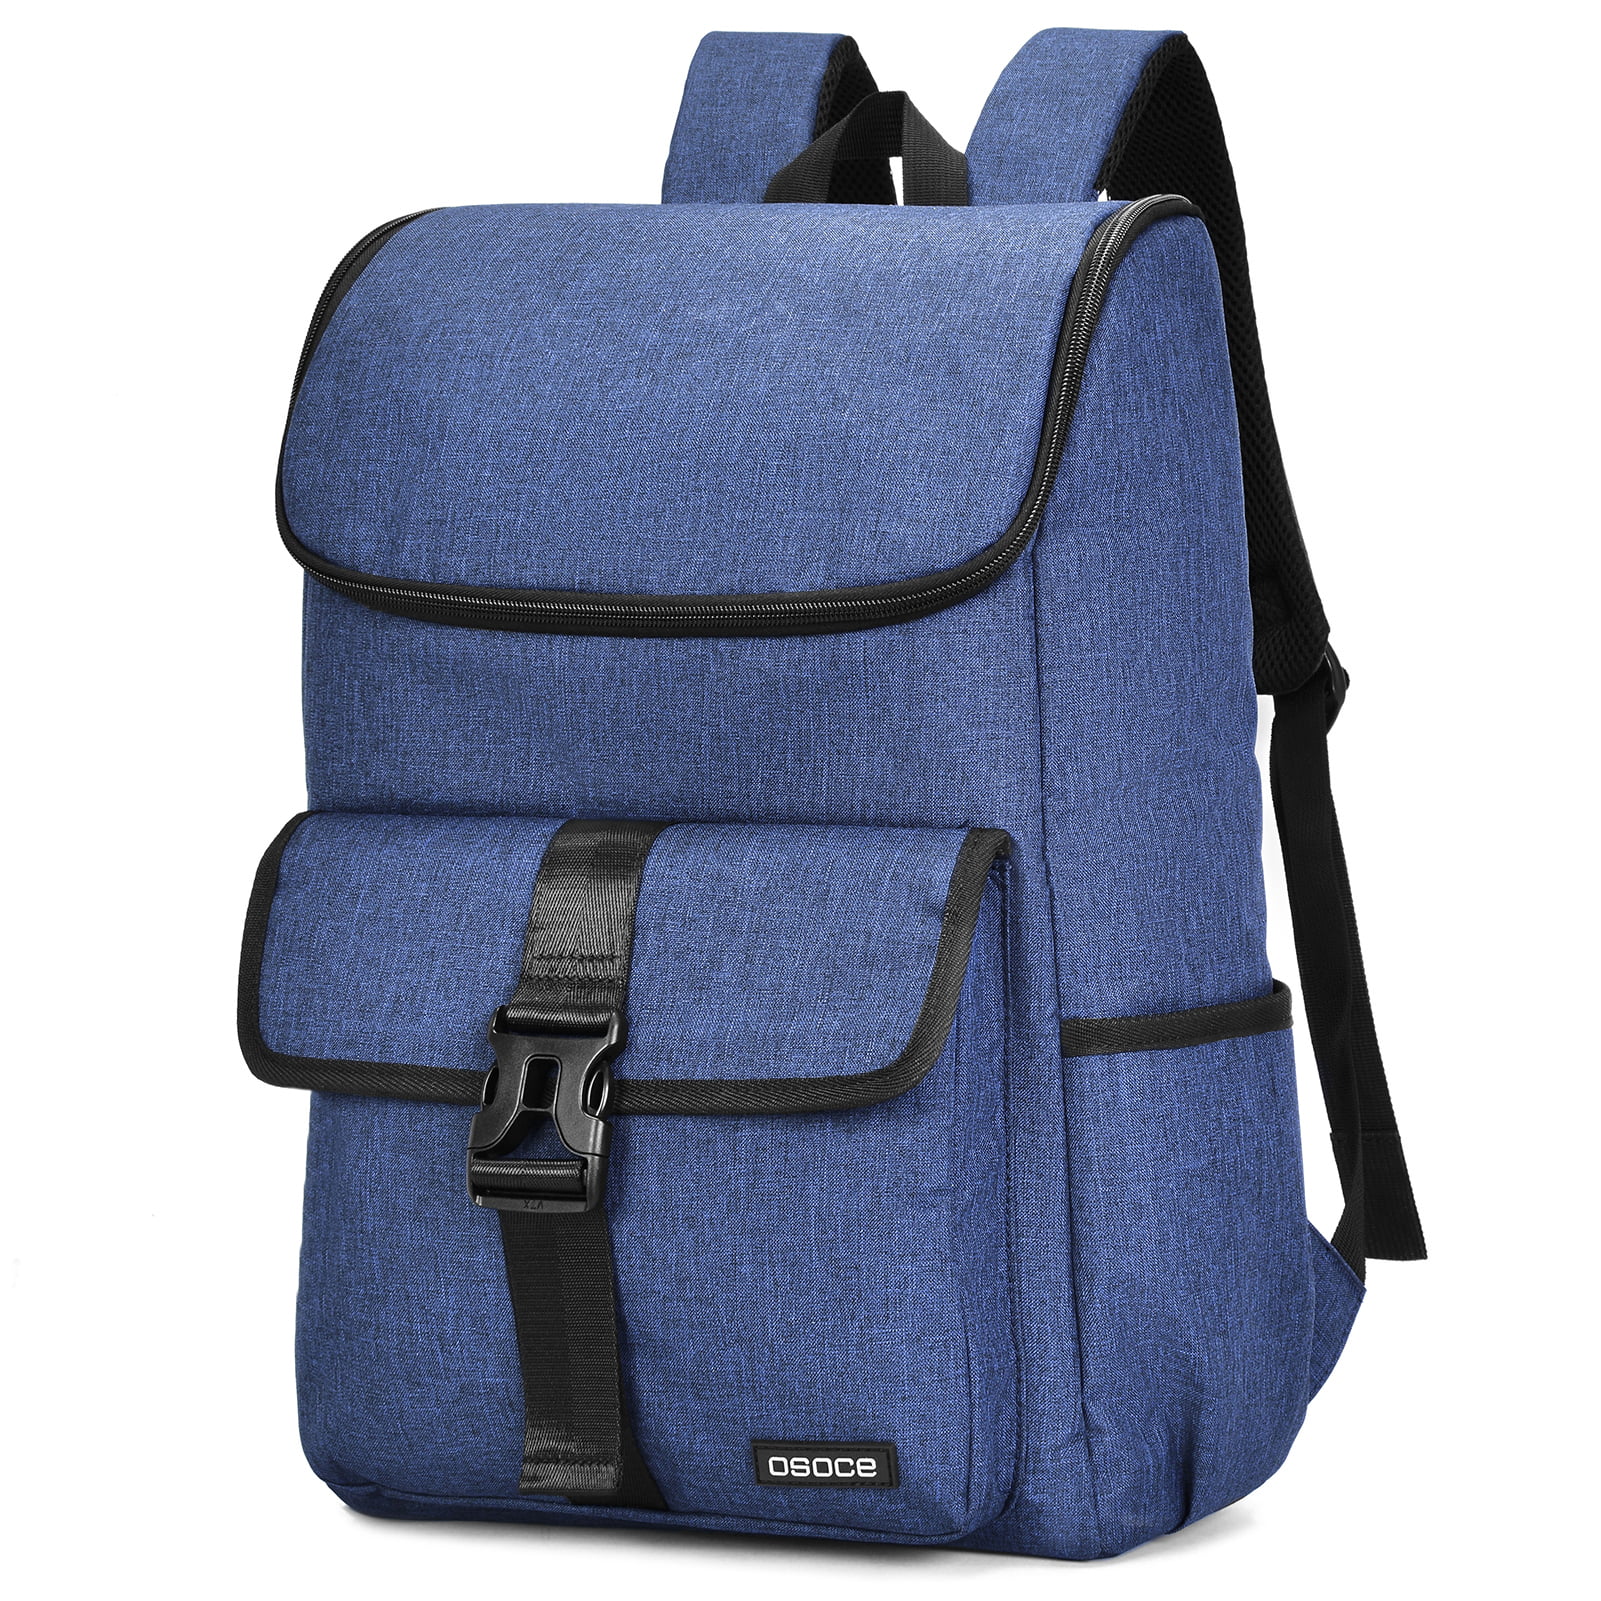 ASPENSPORT Duffel Bag Sport Gym Gear for Men 38L Large Water Resistant Carry on Luggage Travel Camping Hiking Functional Shoulder Grey 